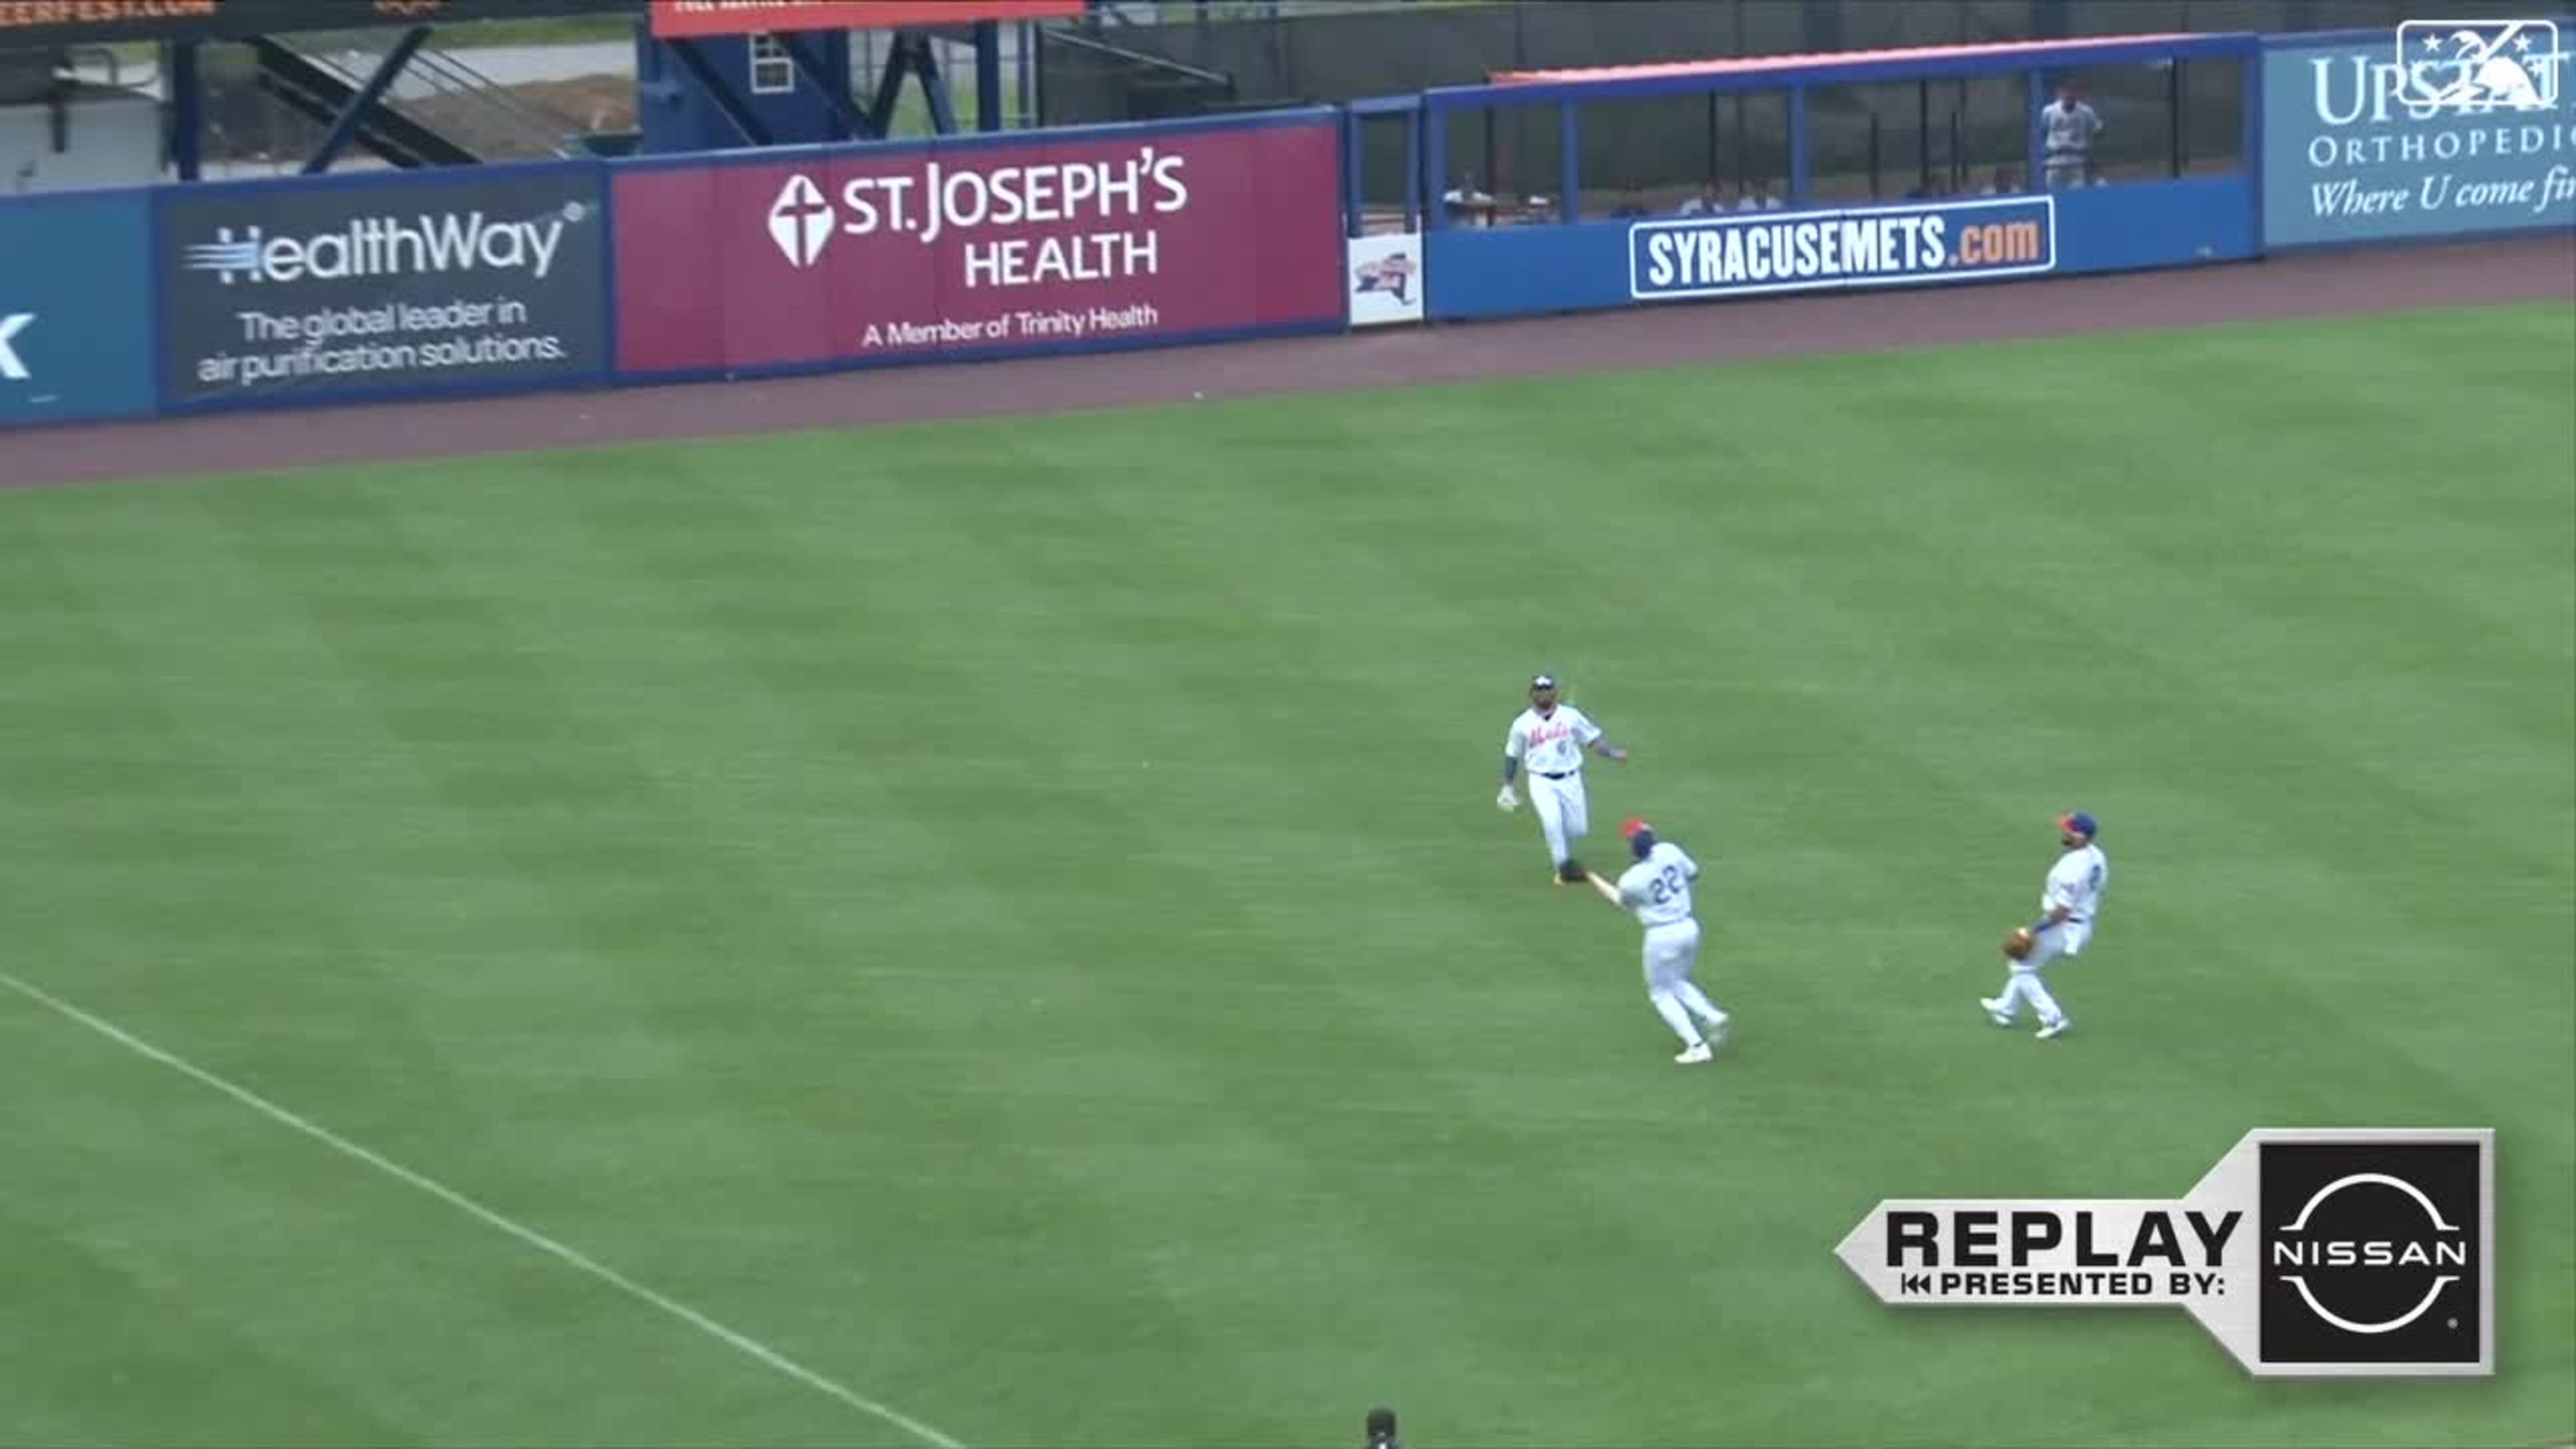 New York Mets third baseman Bret Baty as seen during a MLB game